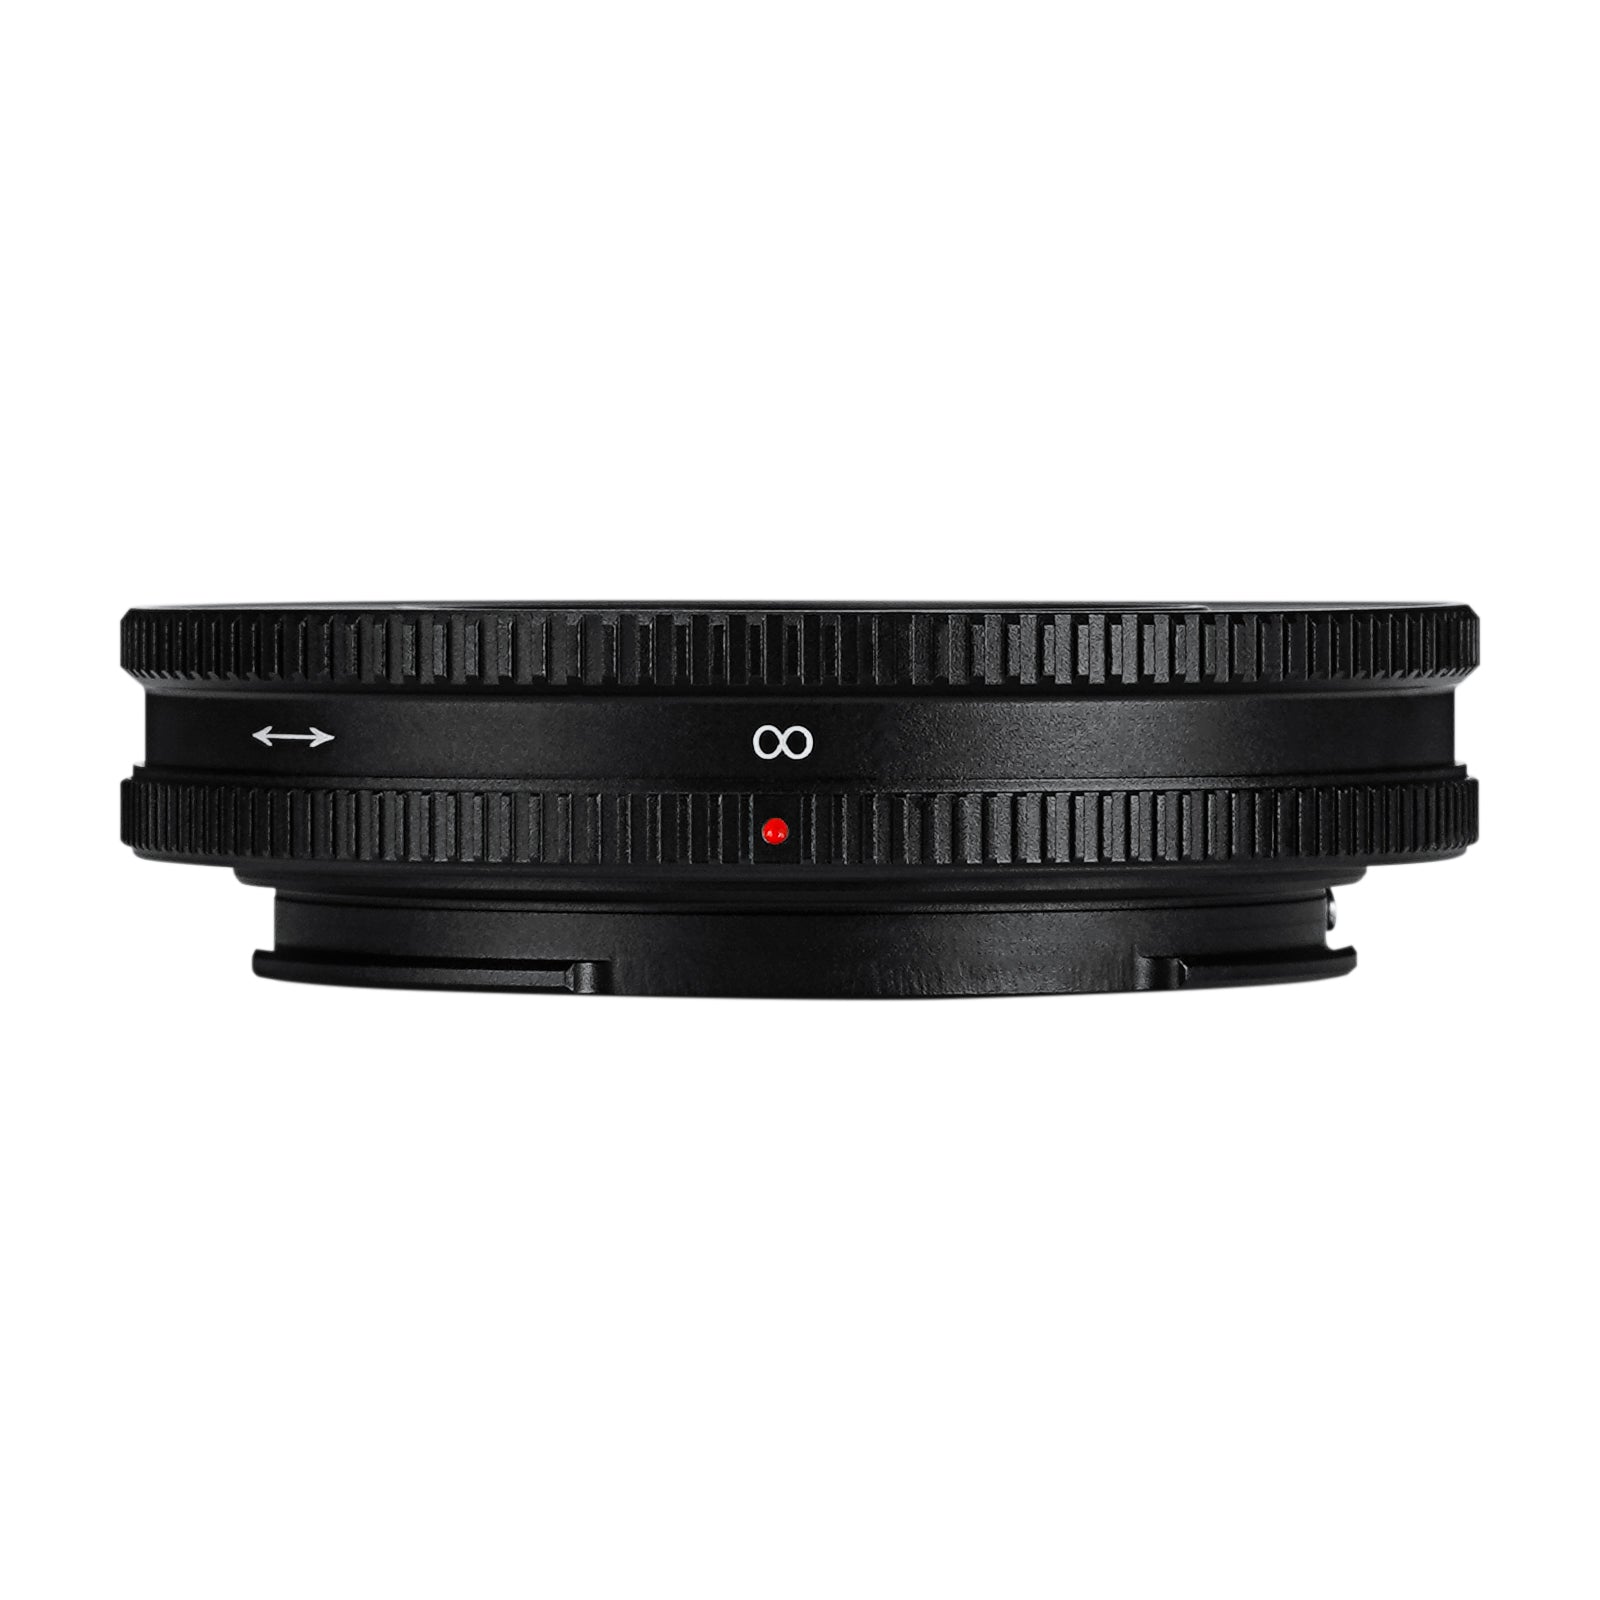 18mm f/6.3 Mark II APS-C lens for Sony E/Fujifilm X/Nikon Z